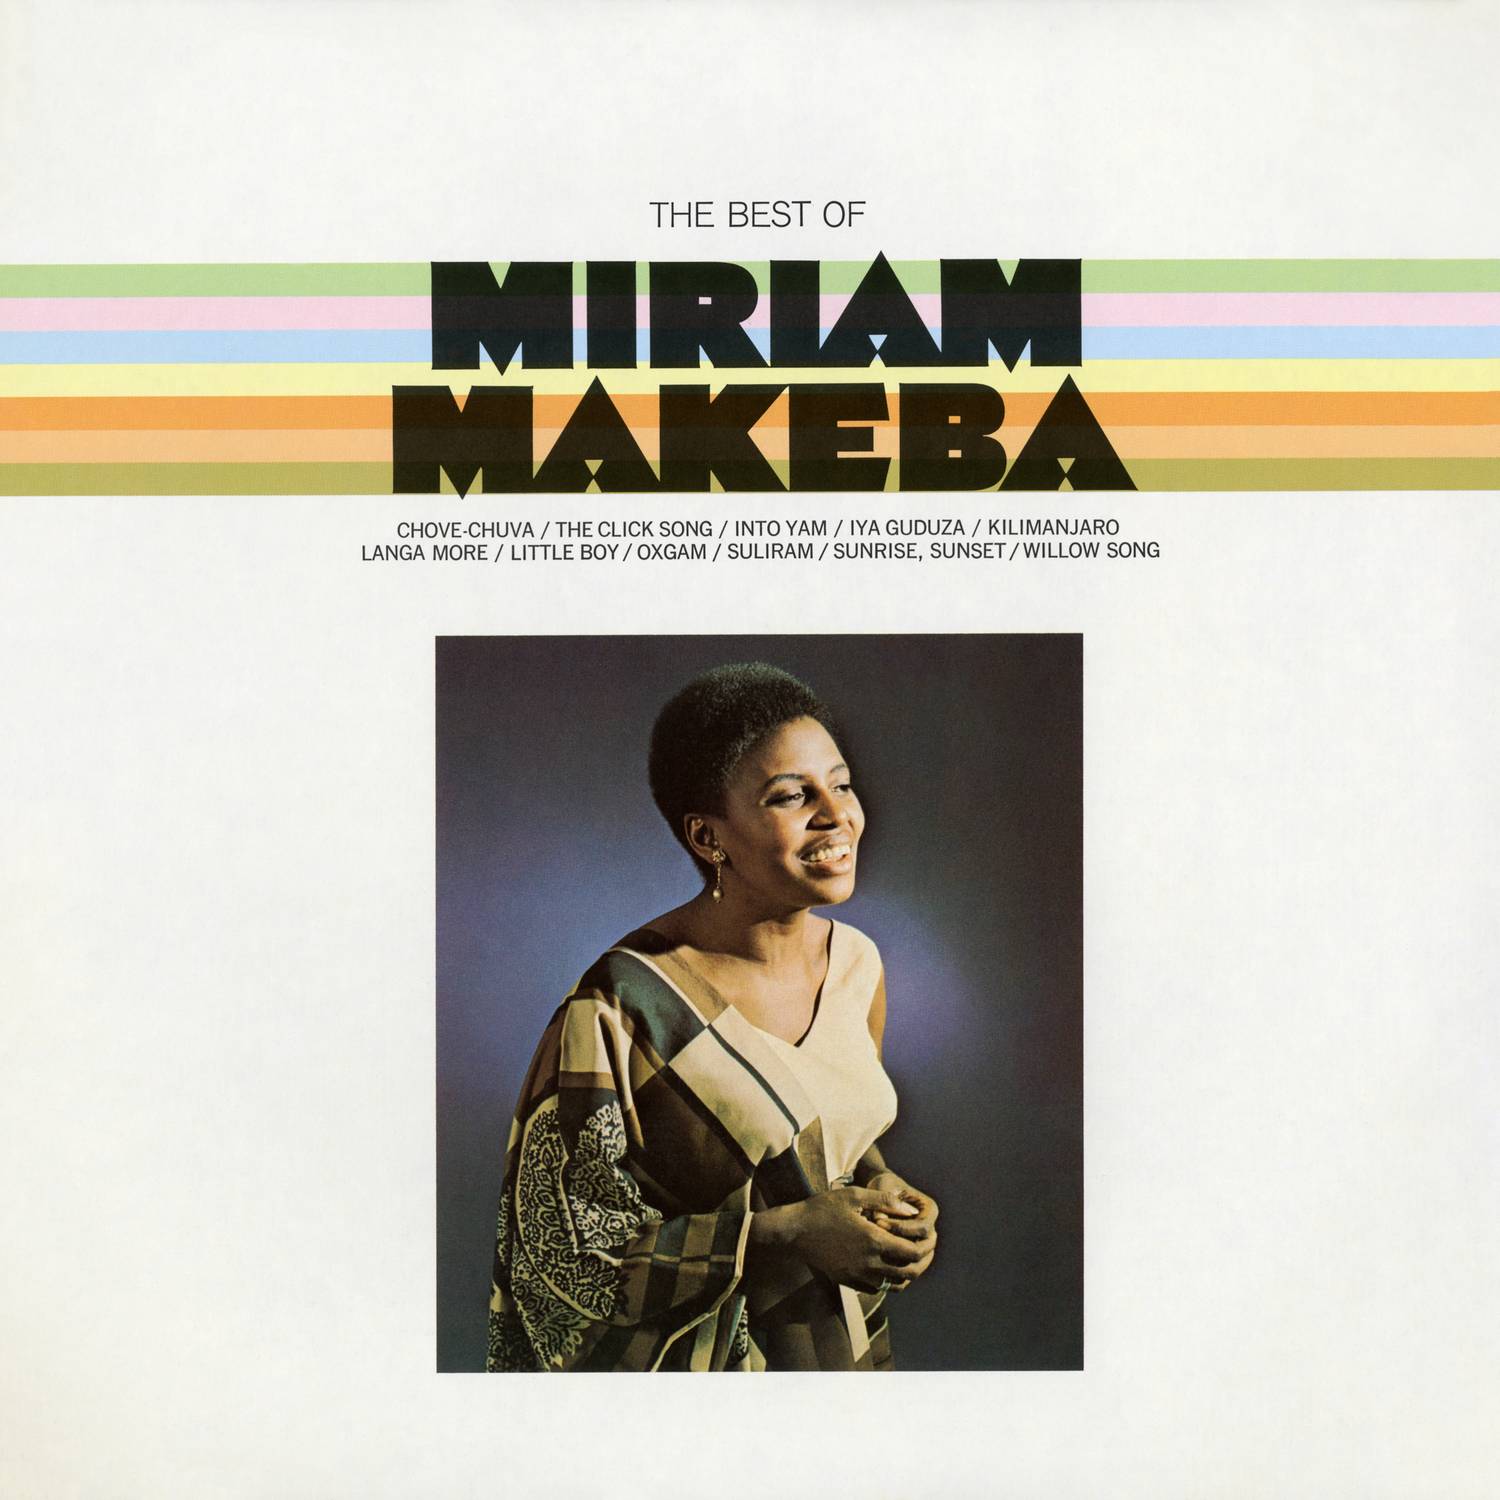 Miriam Makeba - The Best Of (1968/2016) [AcousticSounds FLAC 24bit/96kHz]